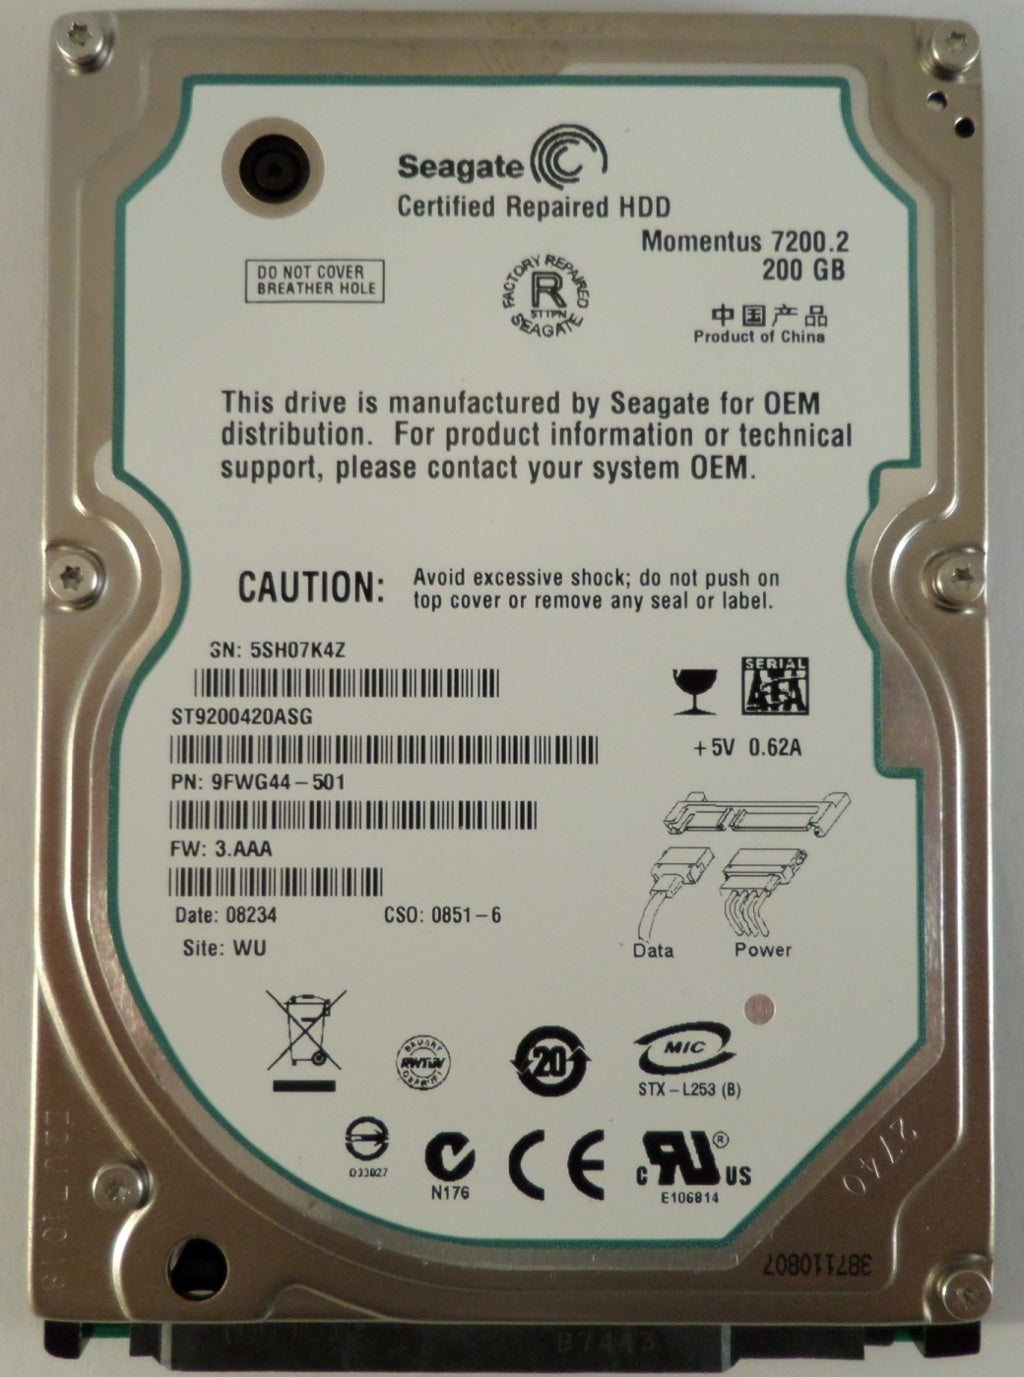 9FWG44-501 - Seagate 200GB SATA 7200rpm 2.5in HDD - Refurbished